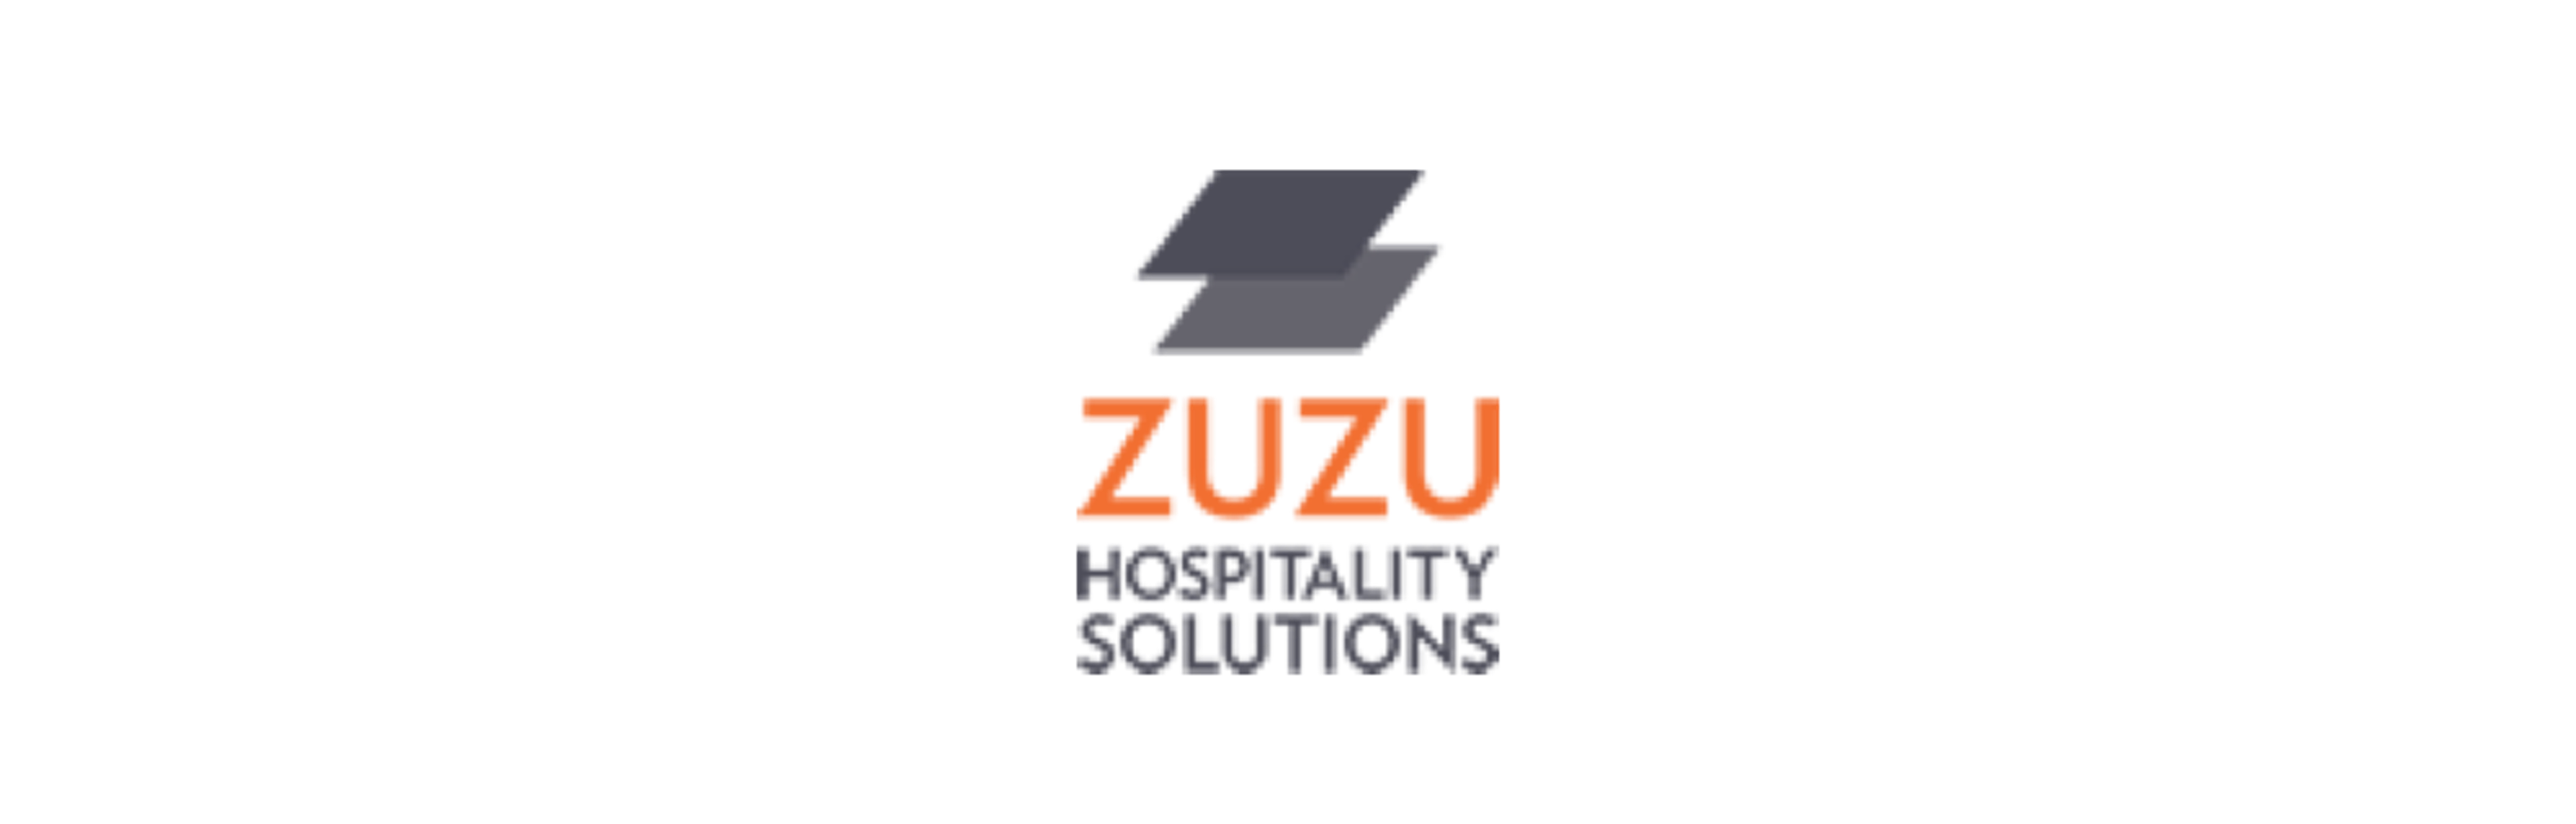 zuzuhospitality.com